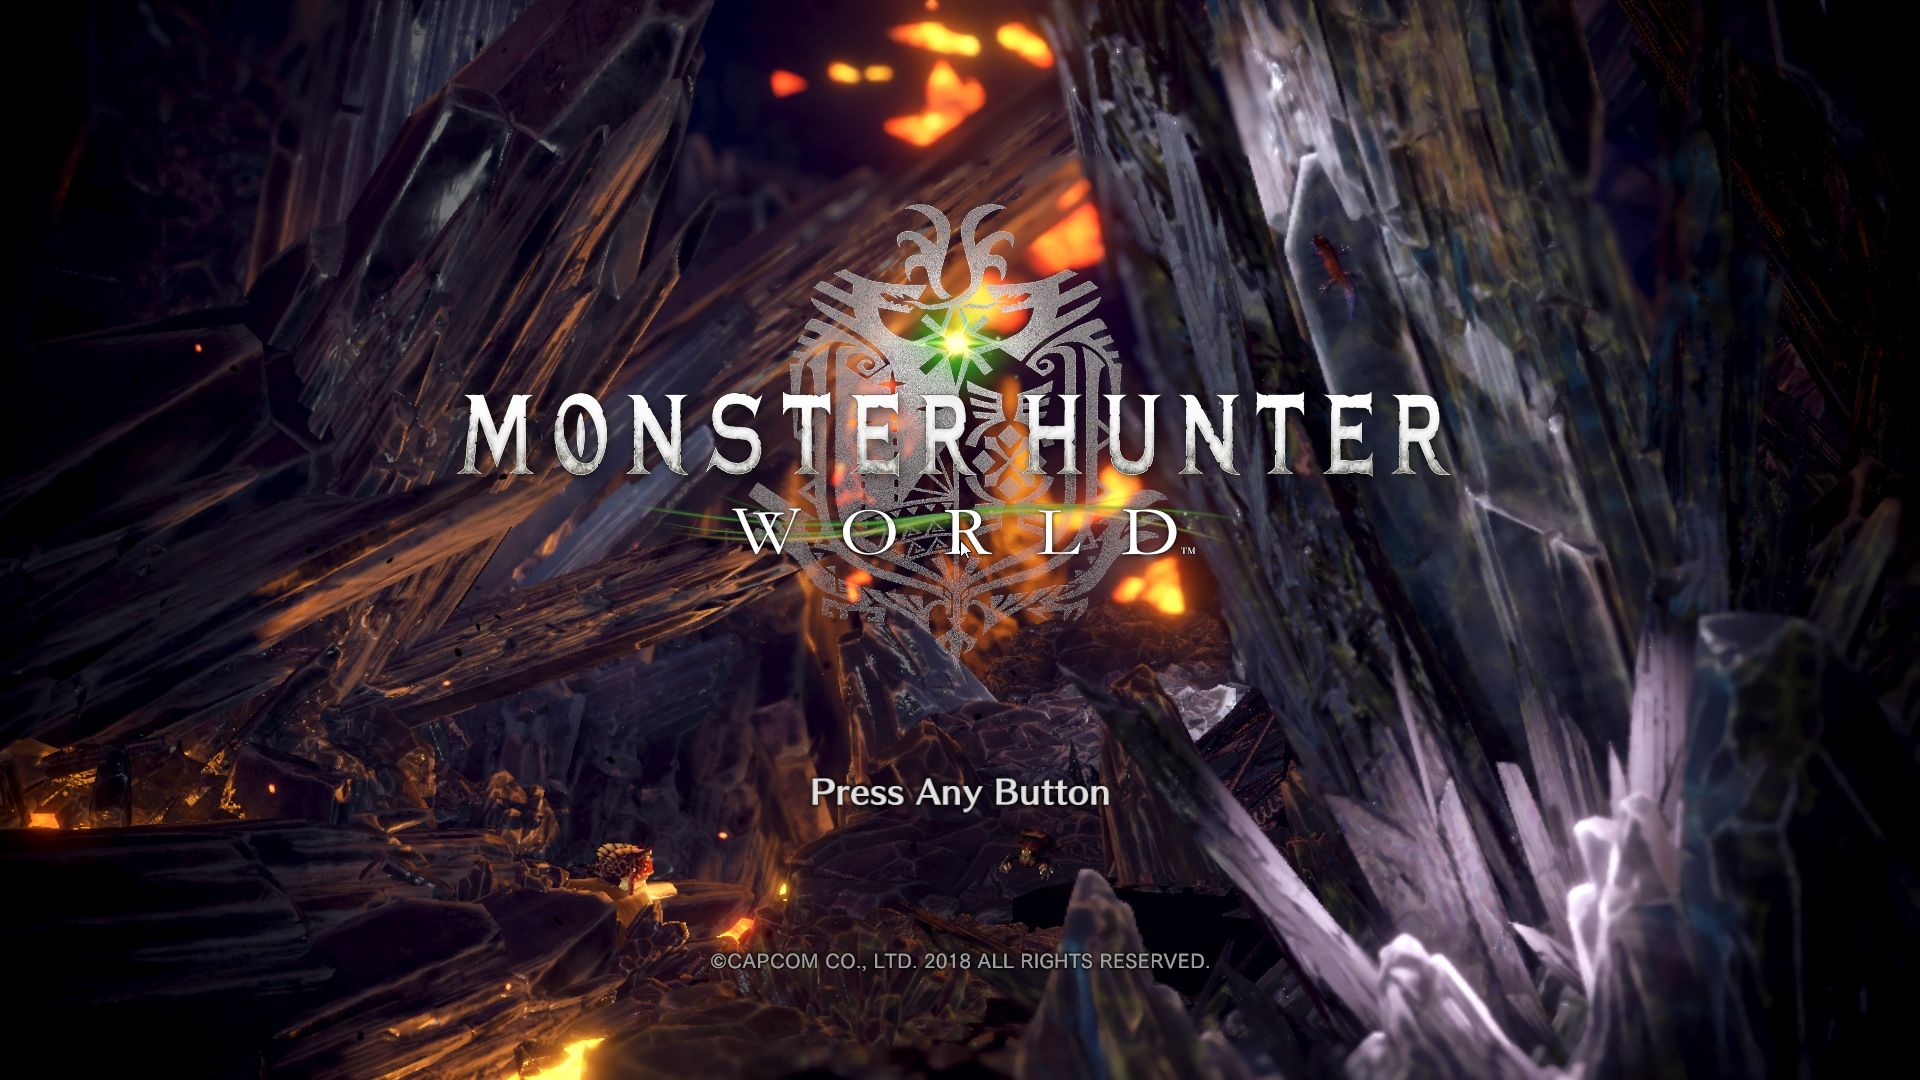 Steam 版 Monster Hunter World テオ テスカトル 炎王龍 戦スーパーノヴァ大爆発エフェクト軽量化 Mod Awgs Foundry